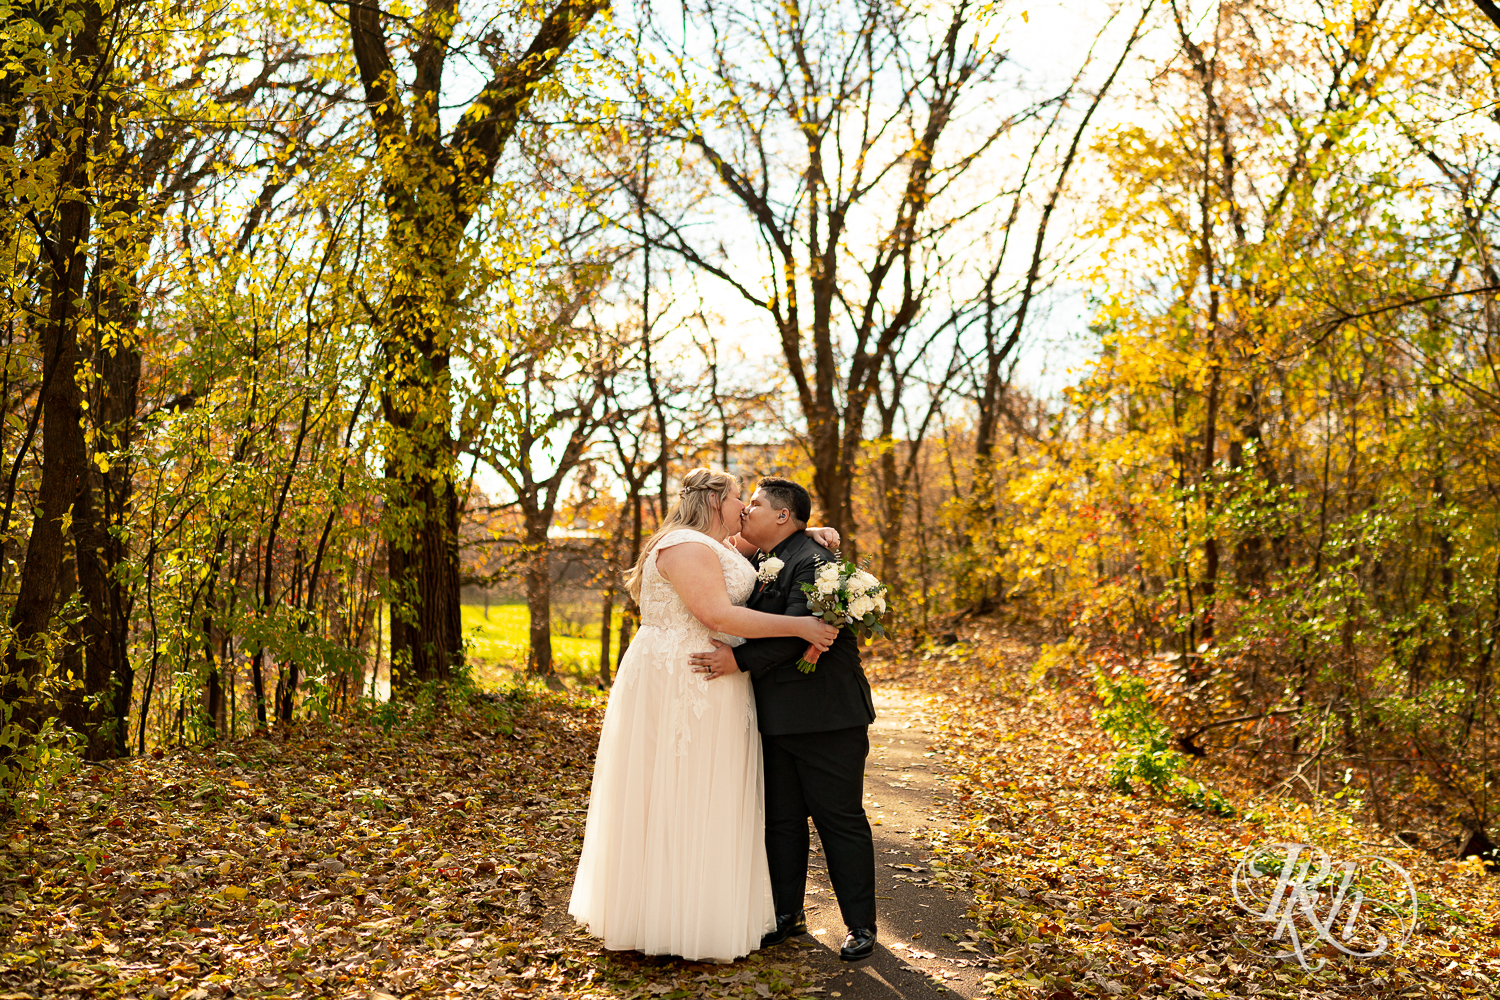 Lesbian brides kiss in fall leaves at the Eagan Community Center in Eagan, Minnesota.